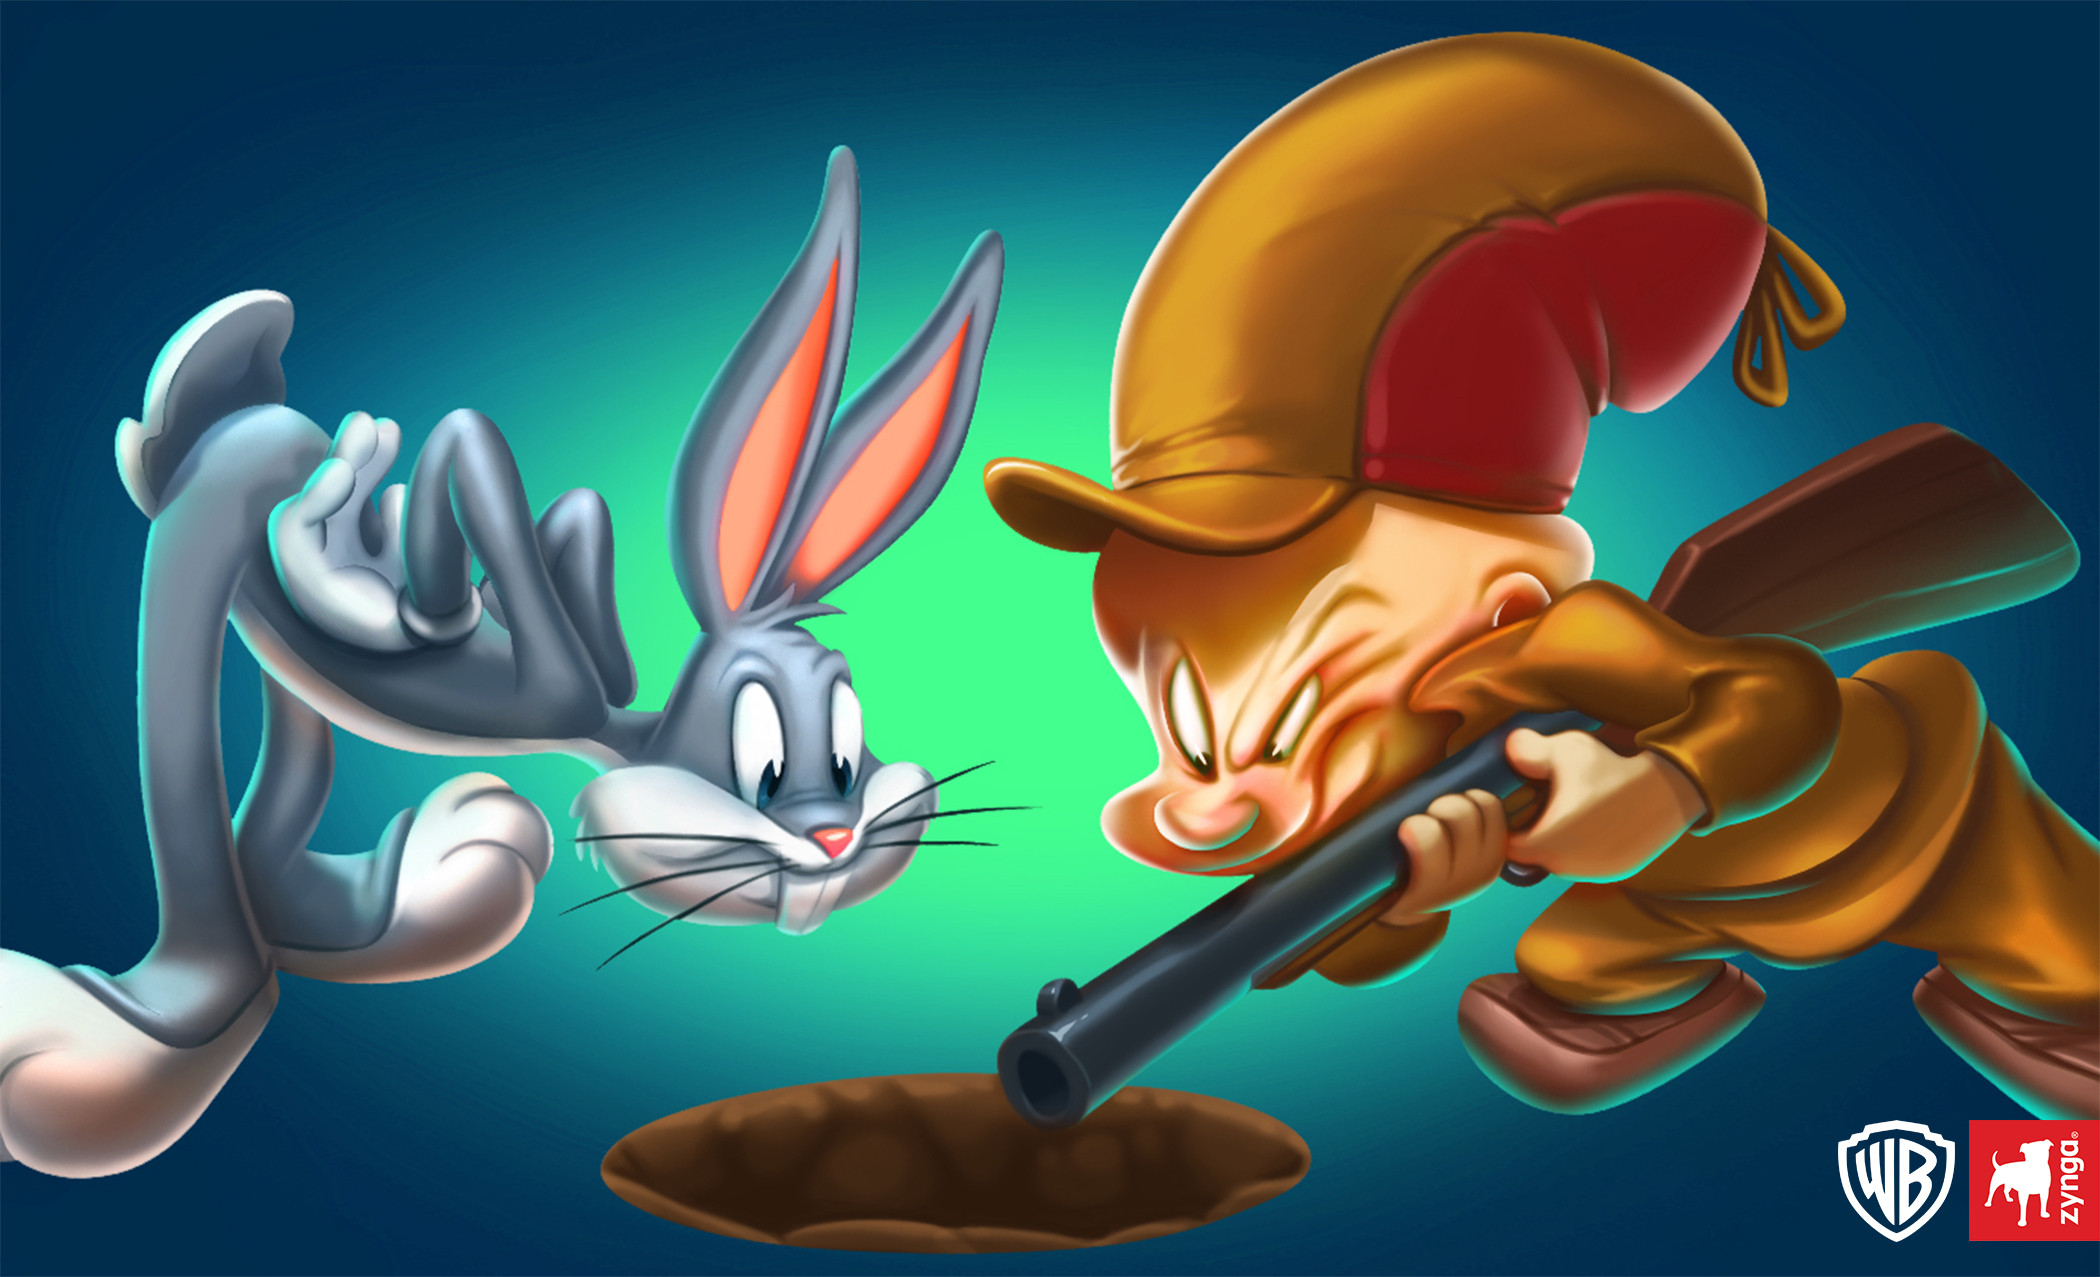 Bugs bunny &amp; Elmer.
©WB &amp; Zynga.